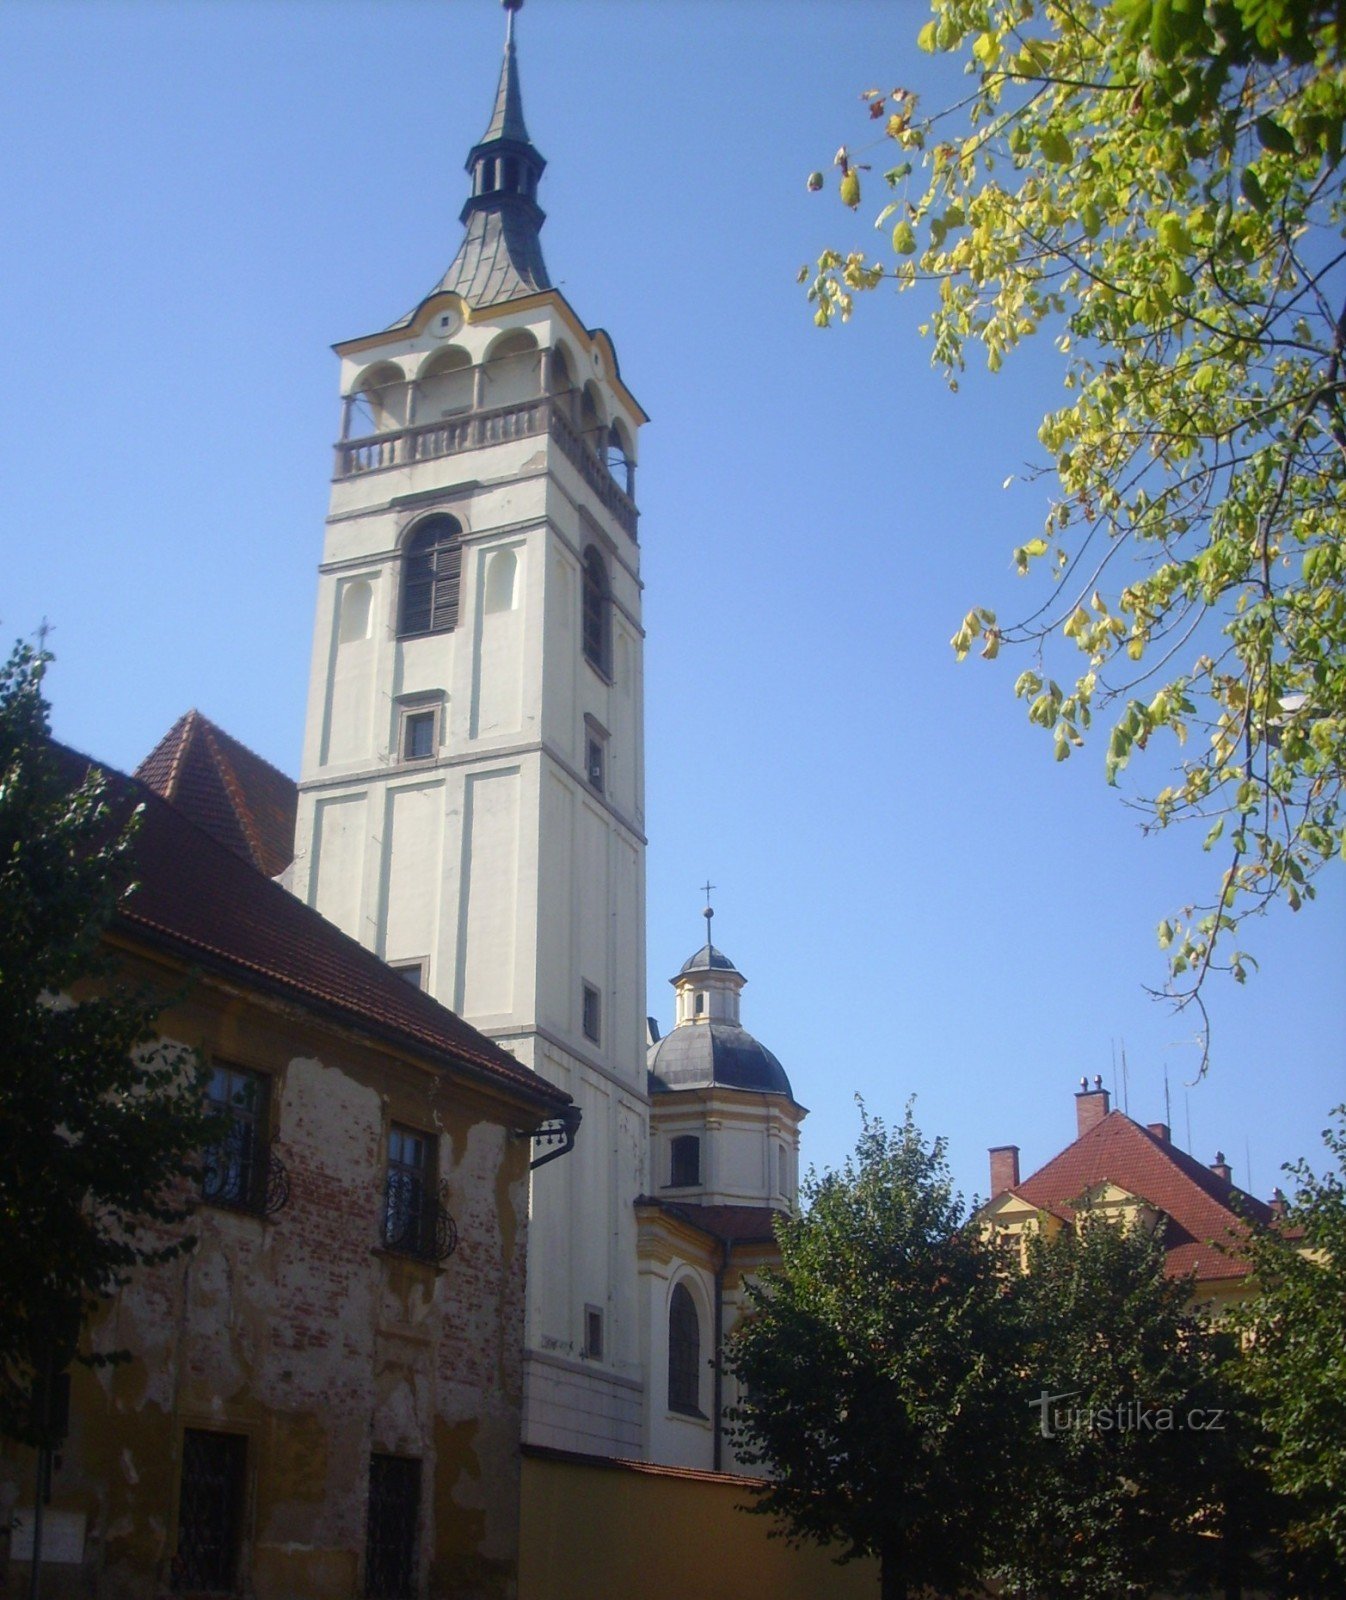 Lipník - tårnet i kirken St. Fr. Serafínský ved siden af ​​parken